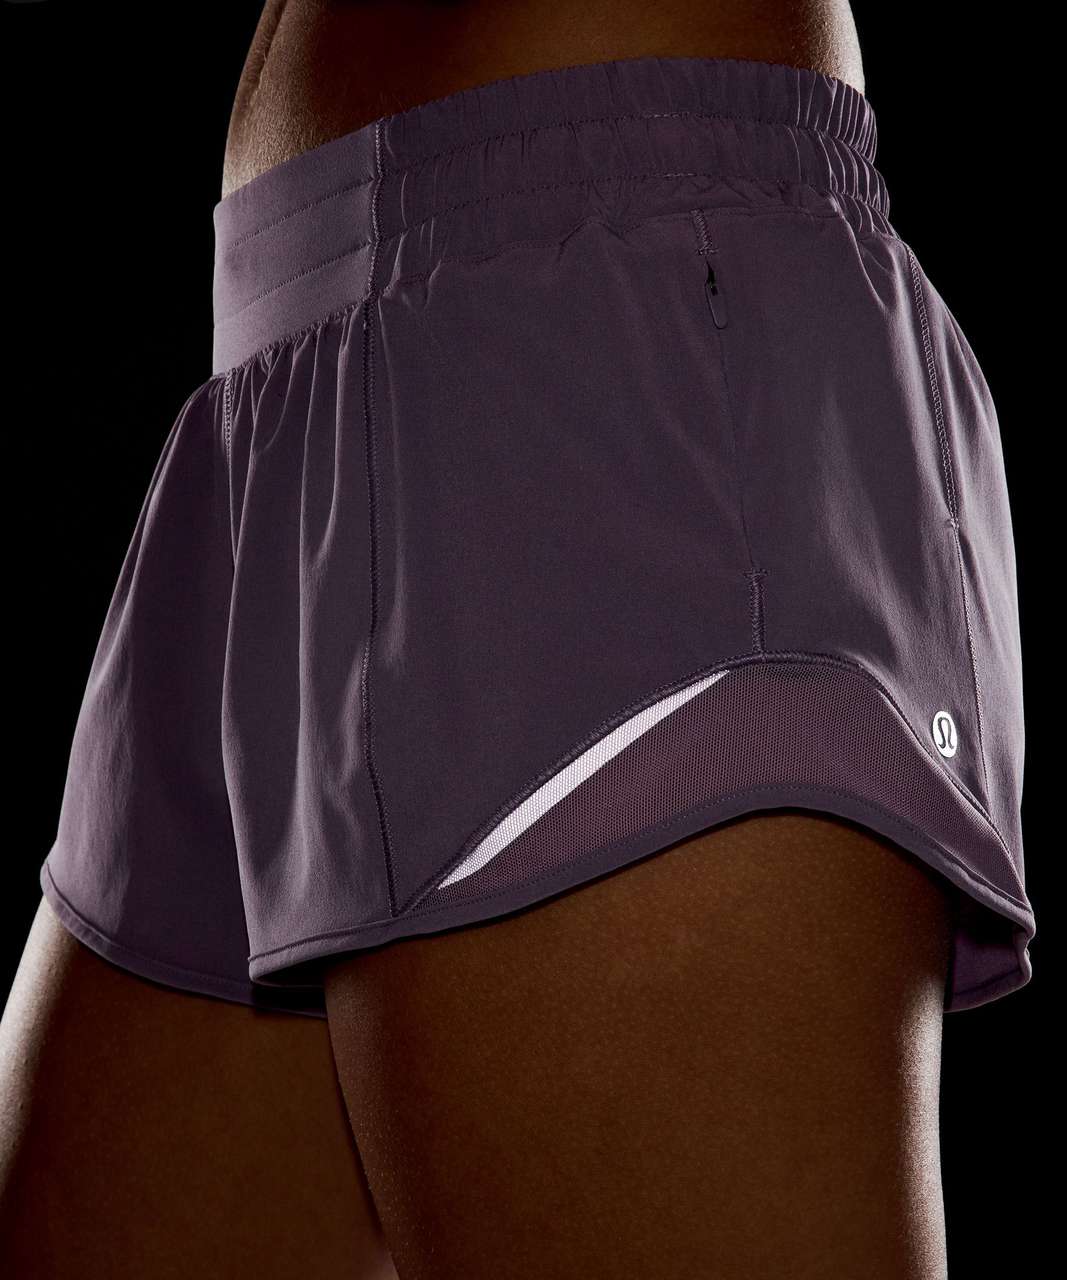 Lululemon Speed Up High-rise Lined Shorts 2.5 - Purple Ash